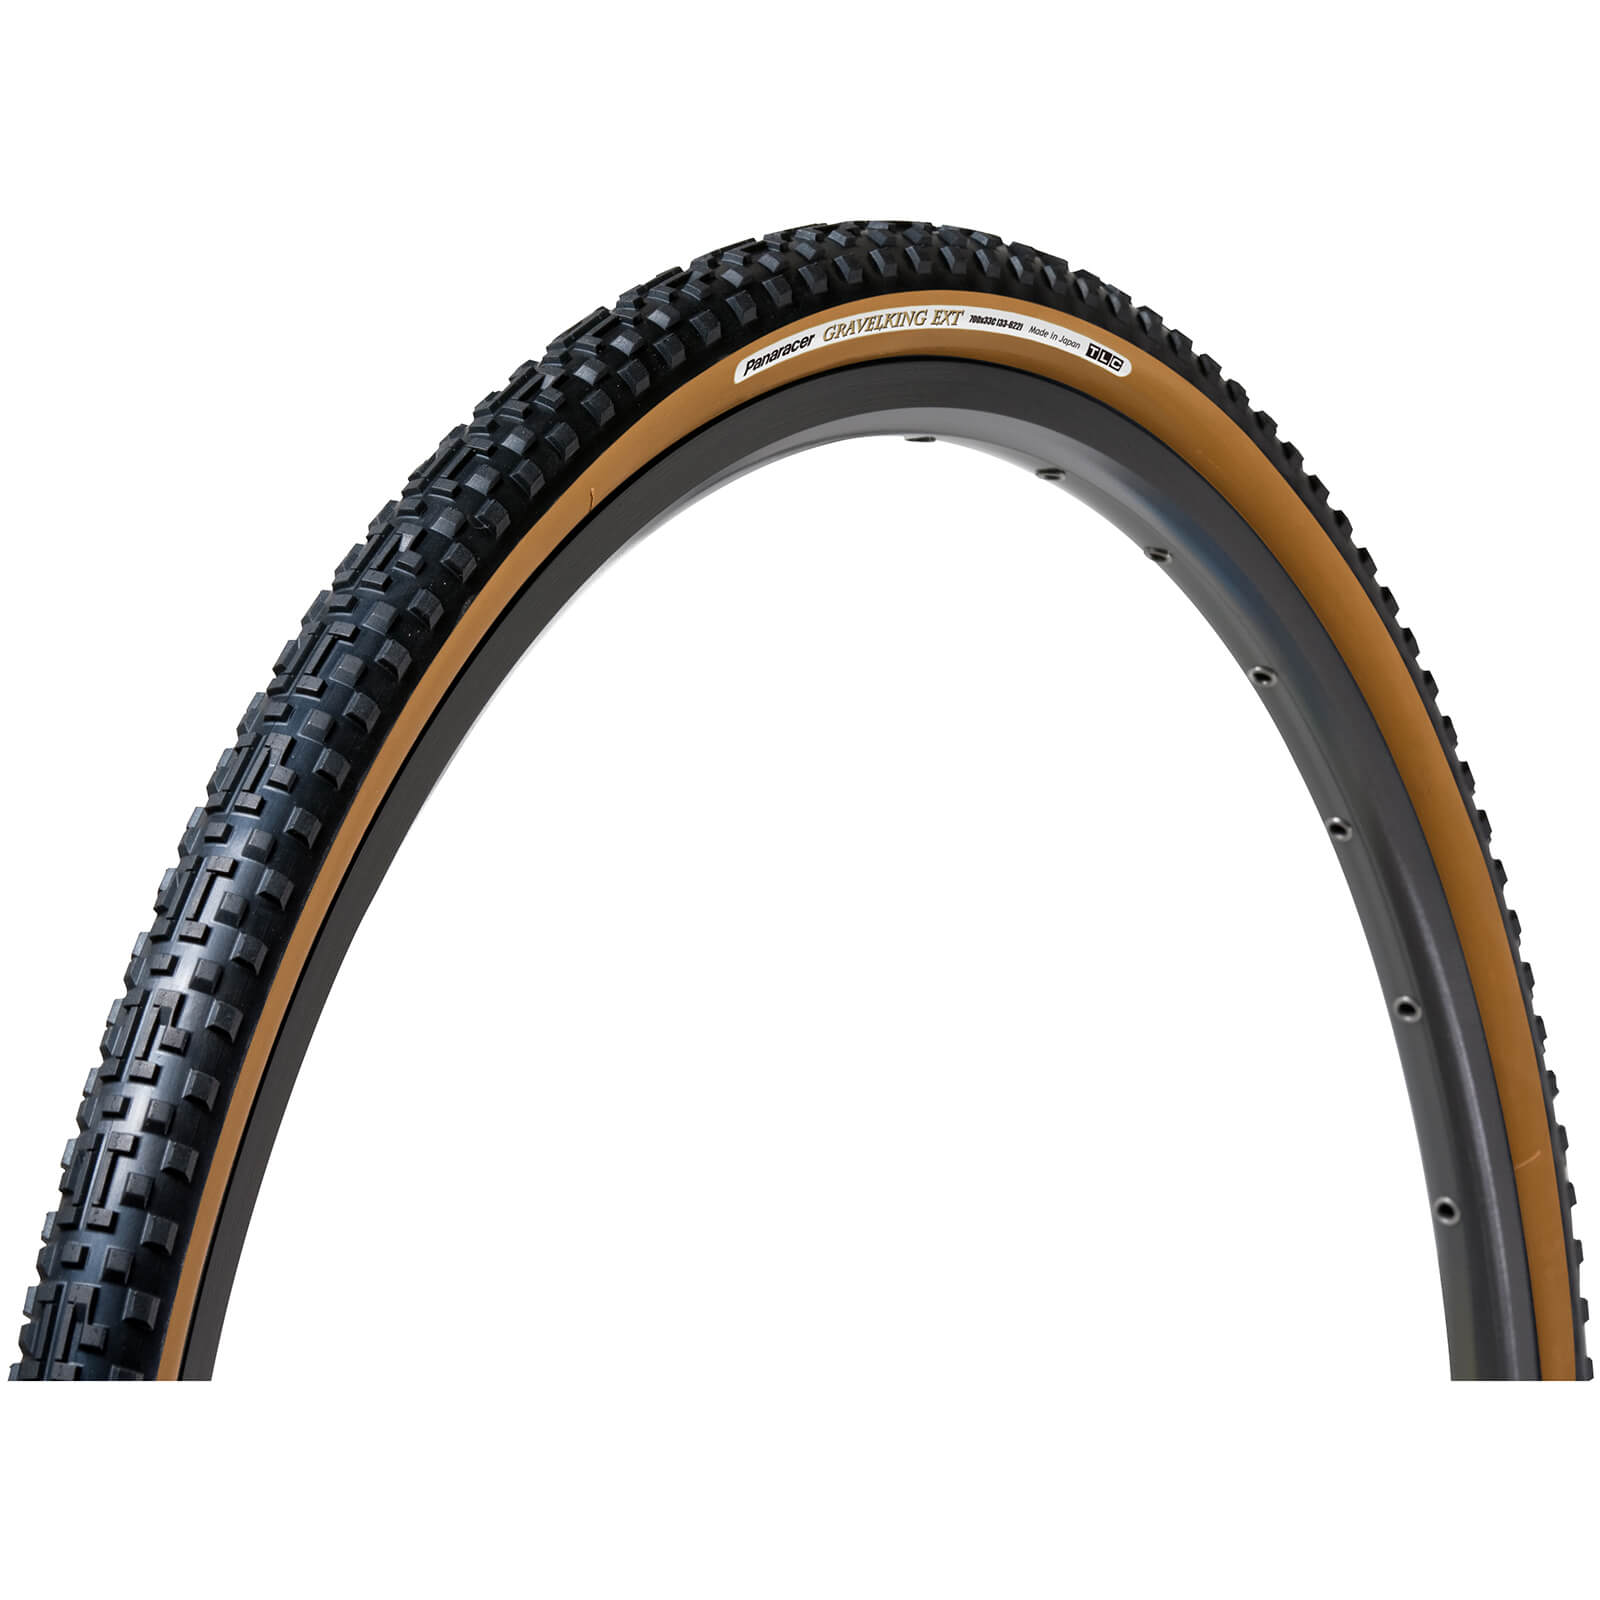 Panaracer Gravel King EXT TLC Folding Gravel Tyre - 700 x 33c - black/brown